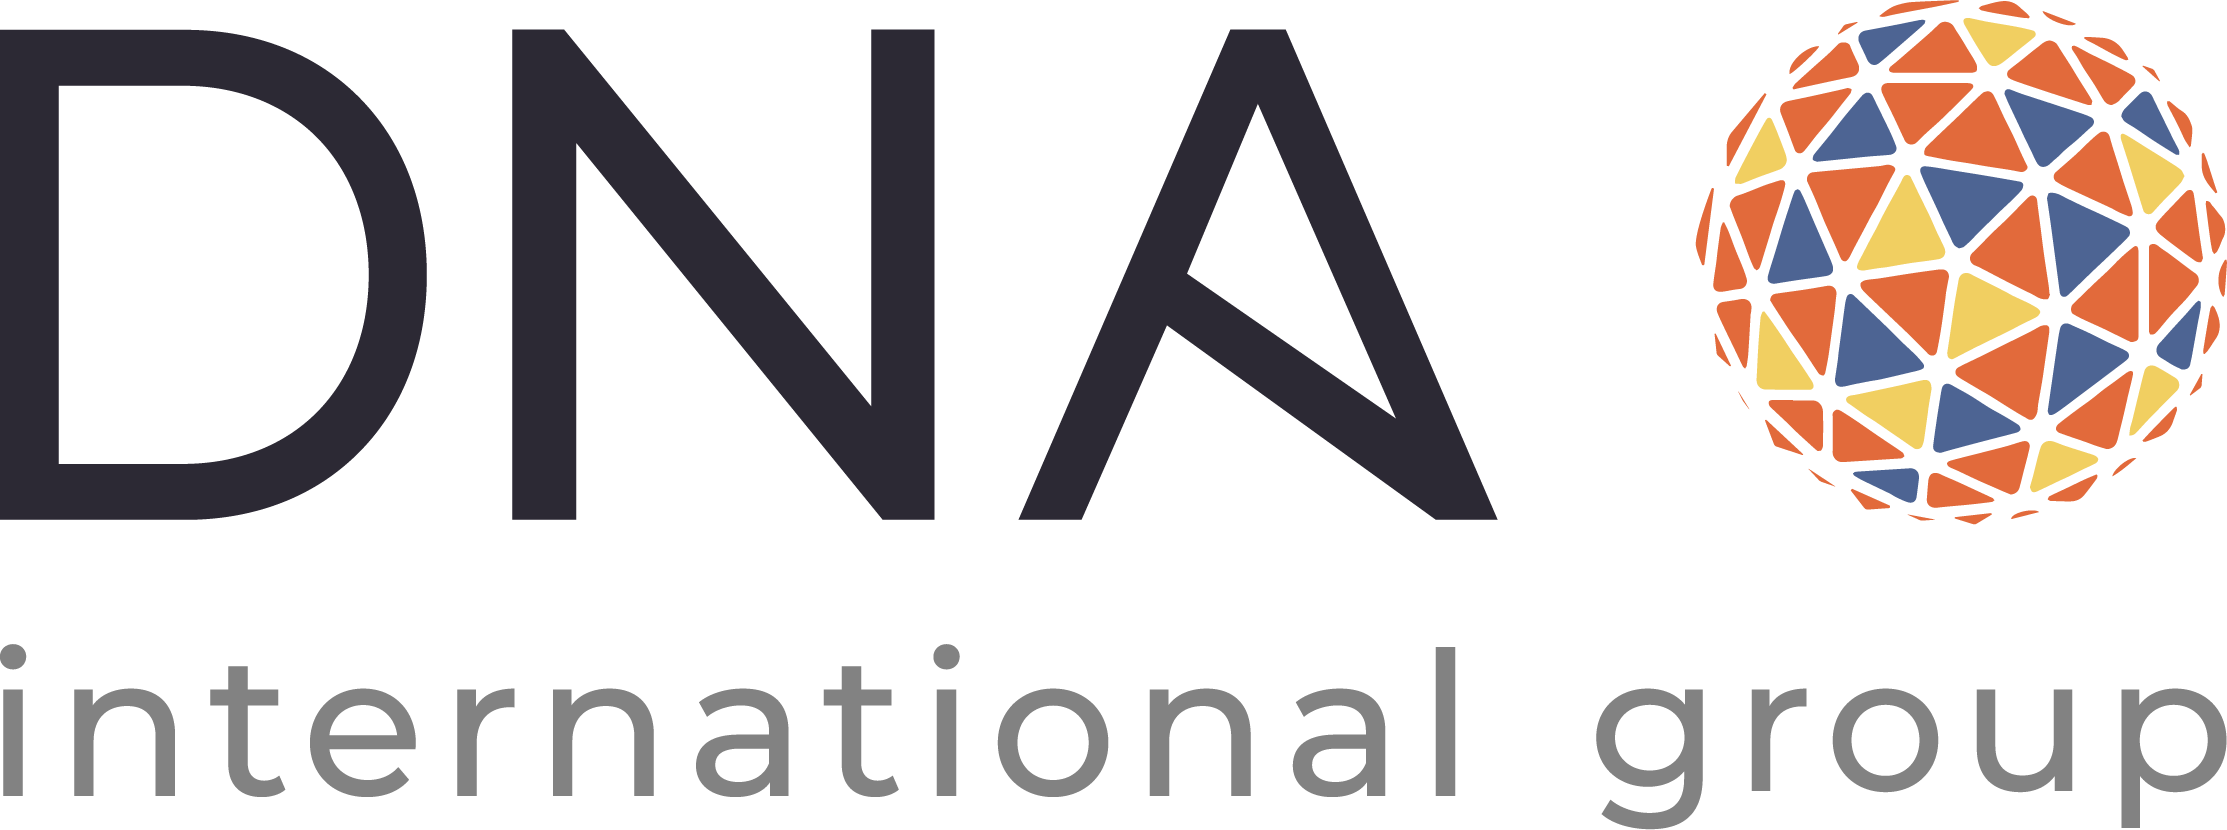 DNA international group